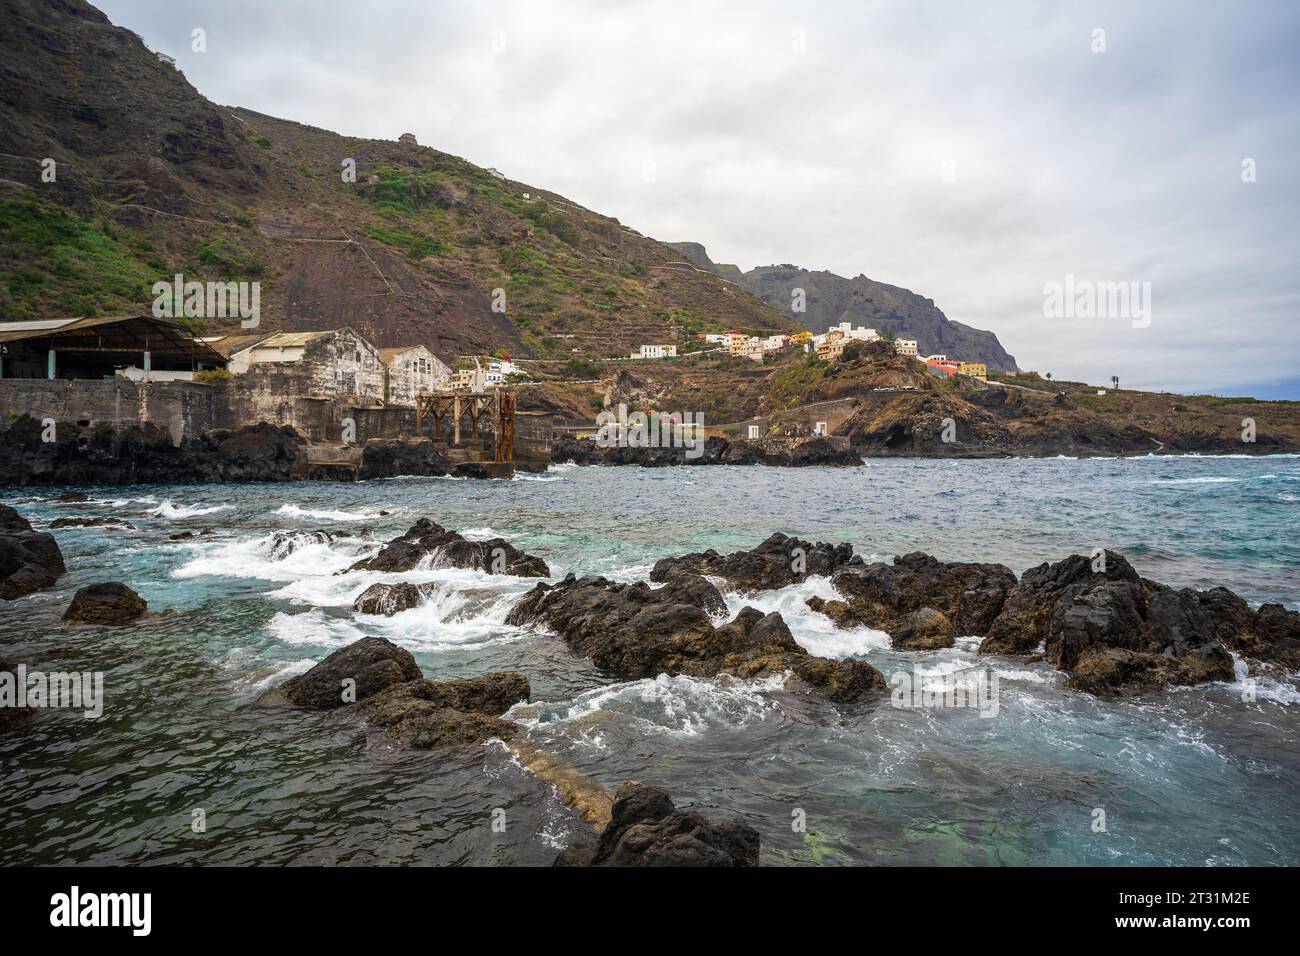 Piscine naturali di El Caleton. Piccola città di Garachico, Tenerife, Isole Canarie, Spagna. Foto Stock